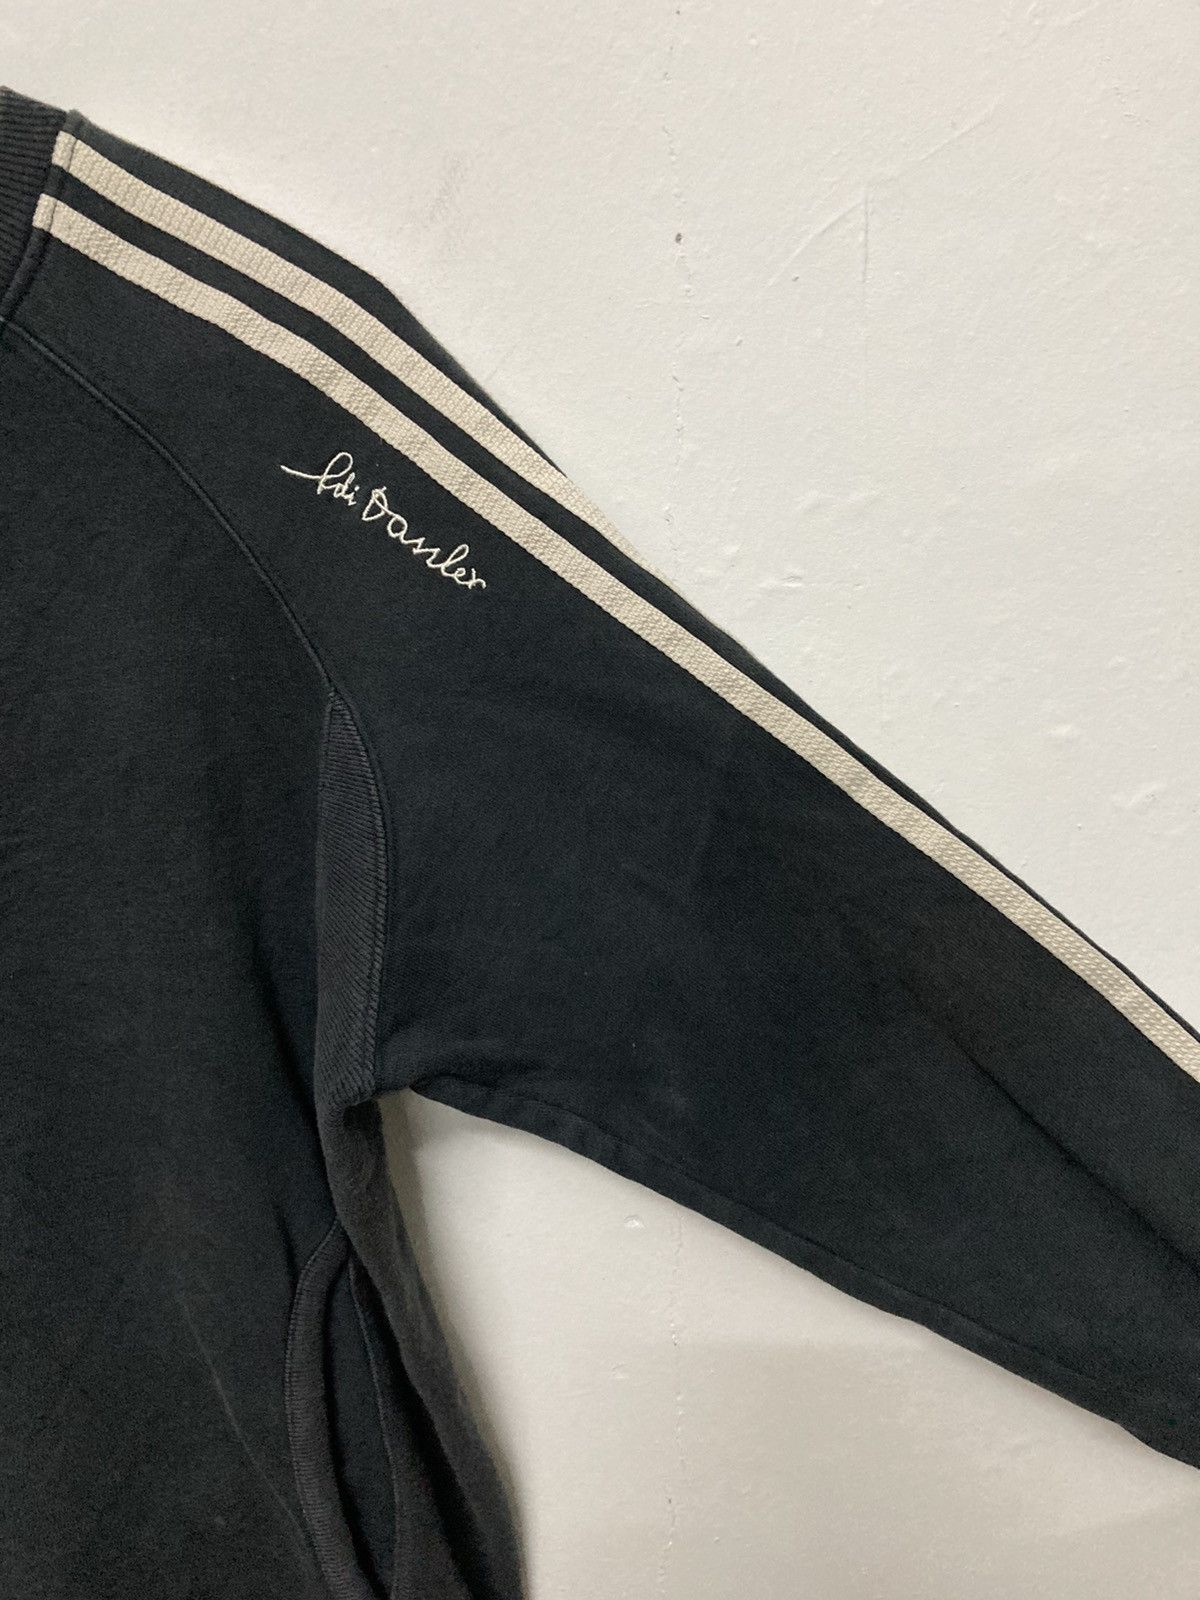 Adidas Adi Dassler Signature Crewneck Sweatshirt - 8